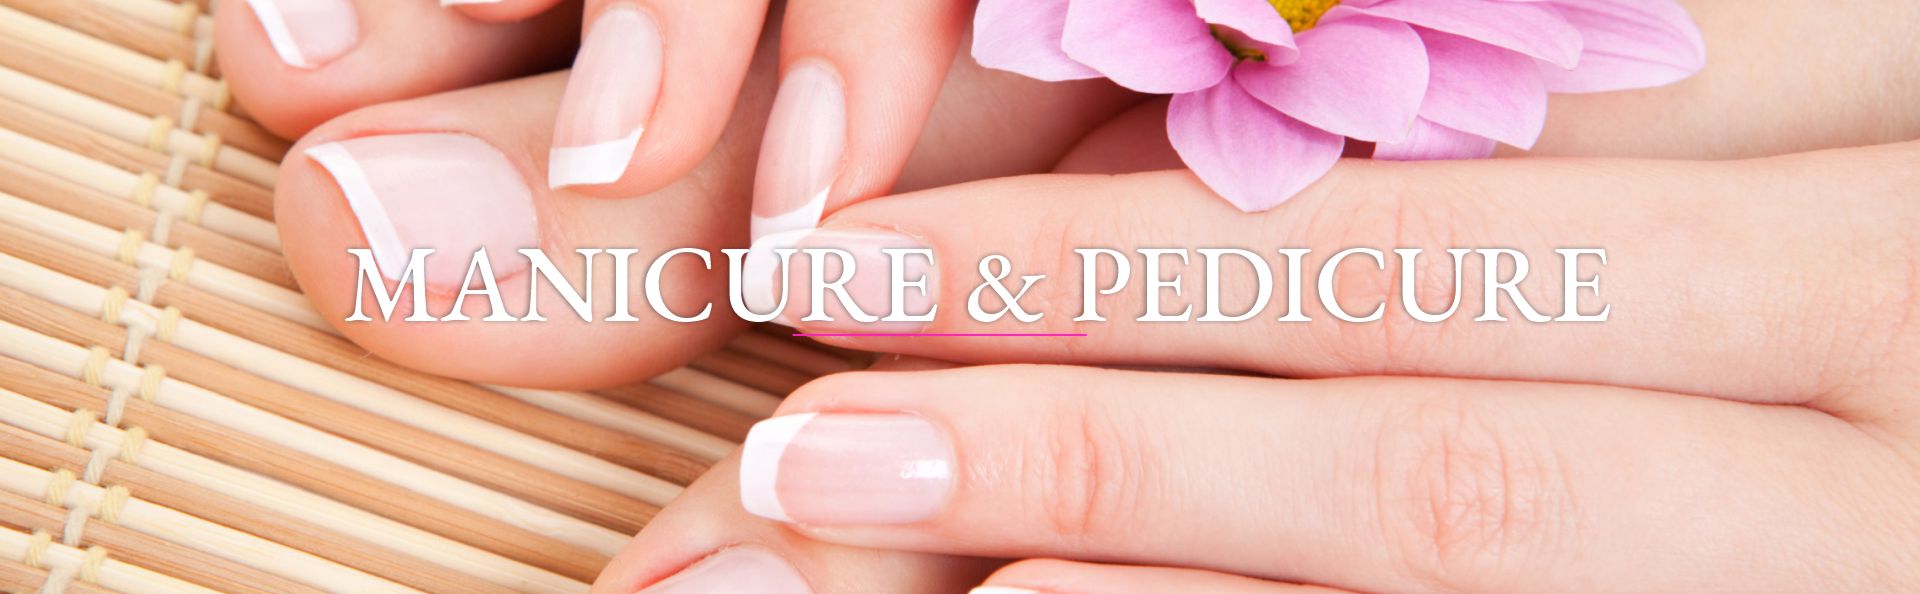 manicure and pedicure Roca Spa